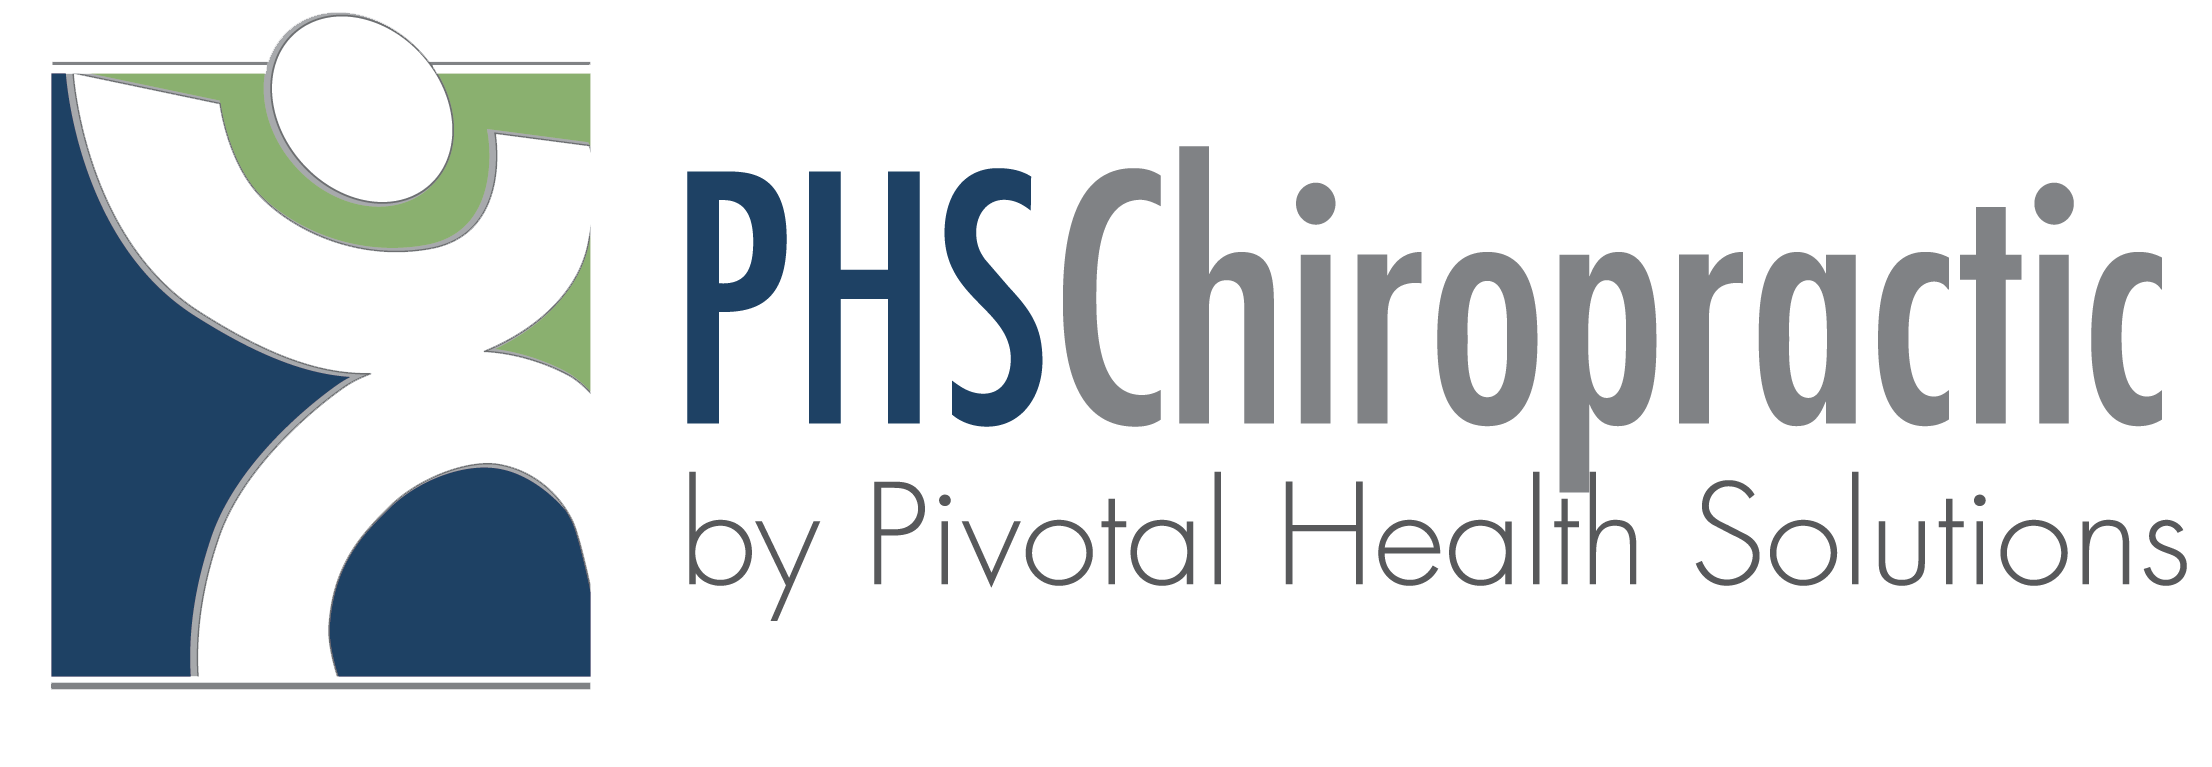 PHS-Chiropractic-Horizontal-logo-2